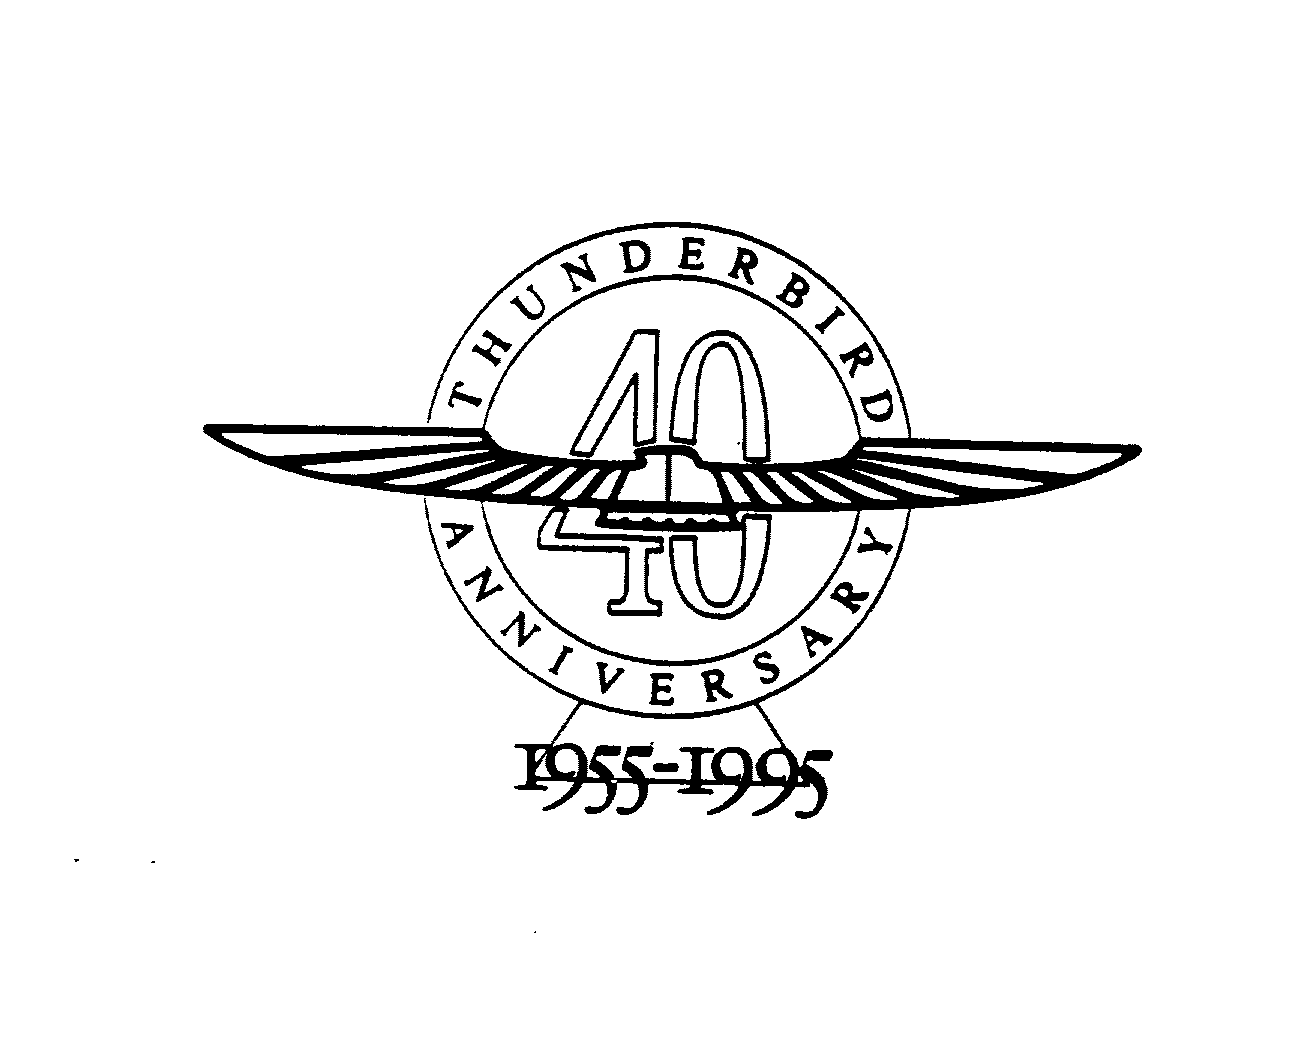 Trademark Logo THUNDERBIRD 40 ANNIVERSARY 1955-1995